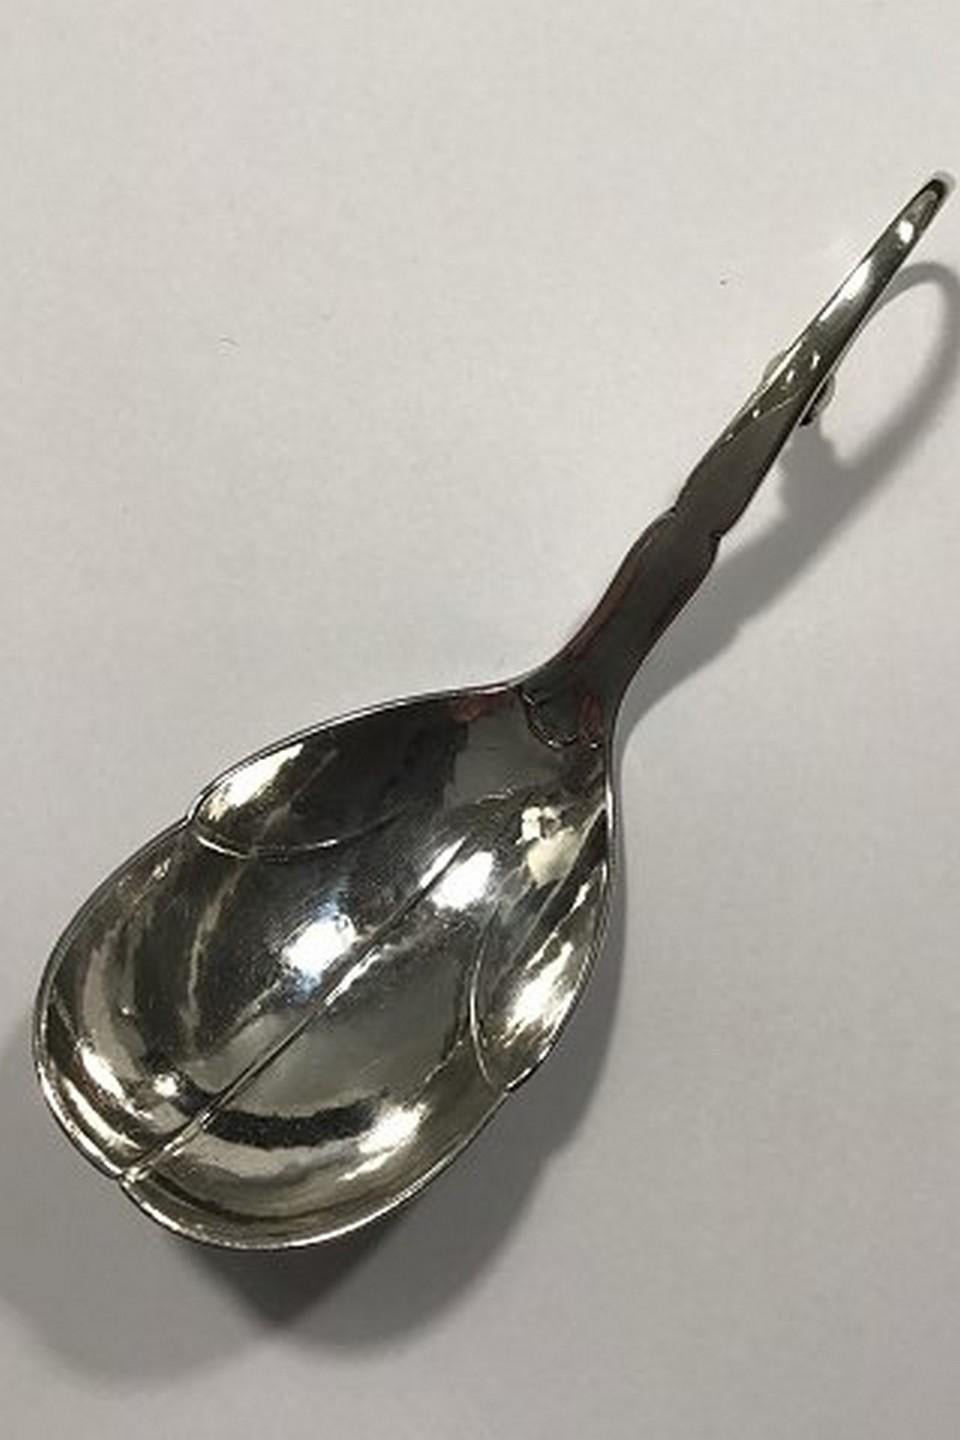 Georg Jensen sterling silver ornamental serving spoon No 21.
Measures: 14.5 cm (5 45/64 in)
Item no.: 436267.